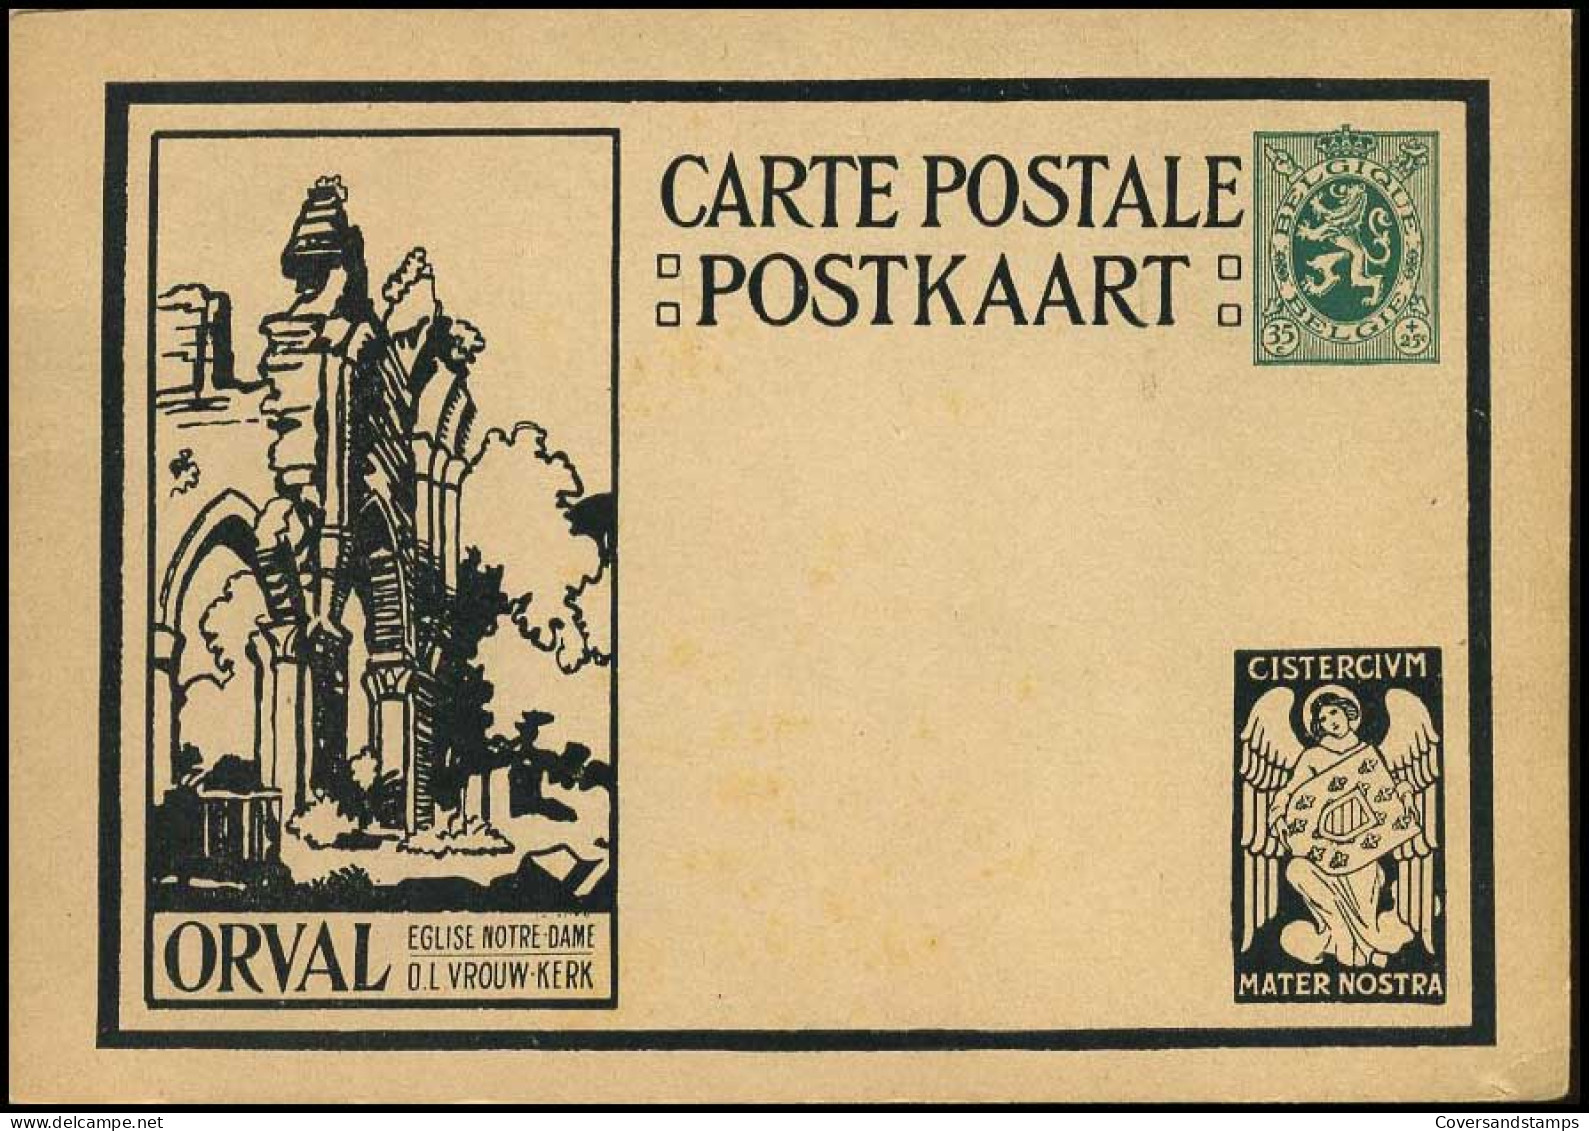 Postkaart - Orval, O.L. Vrouw Kerk - Cartes Postales Illustrées (1971-2014) [BK]